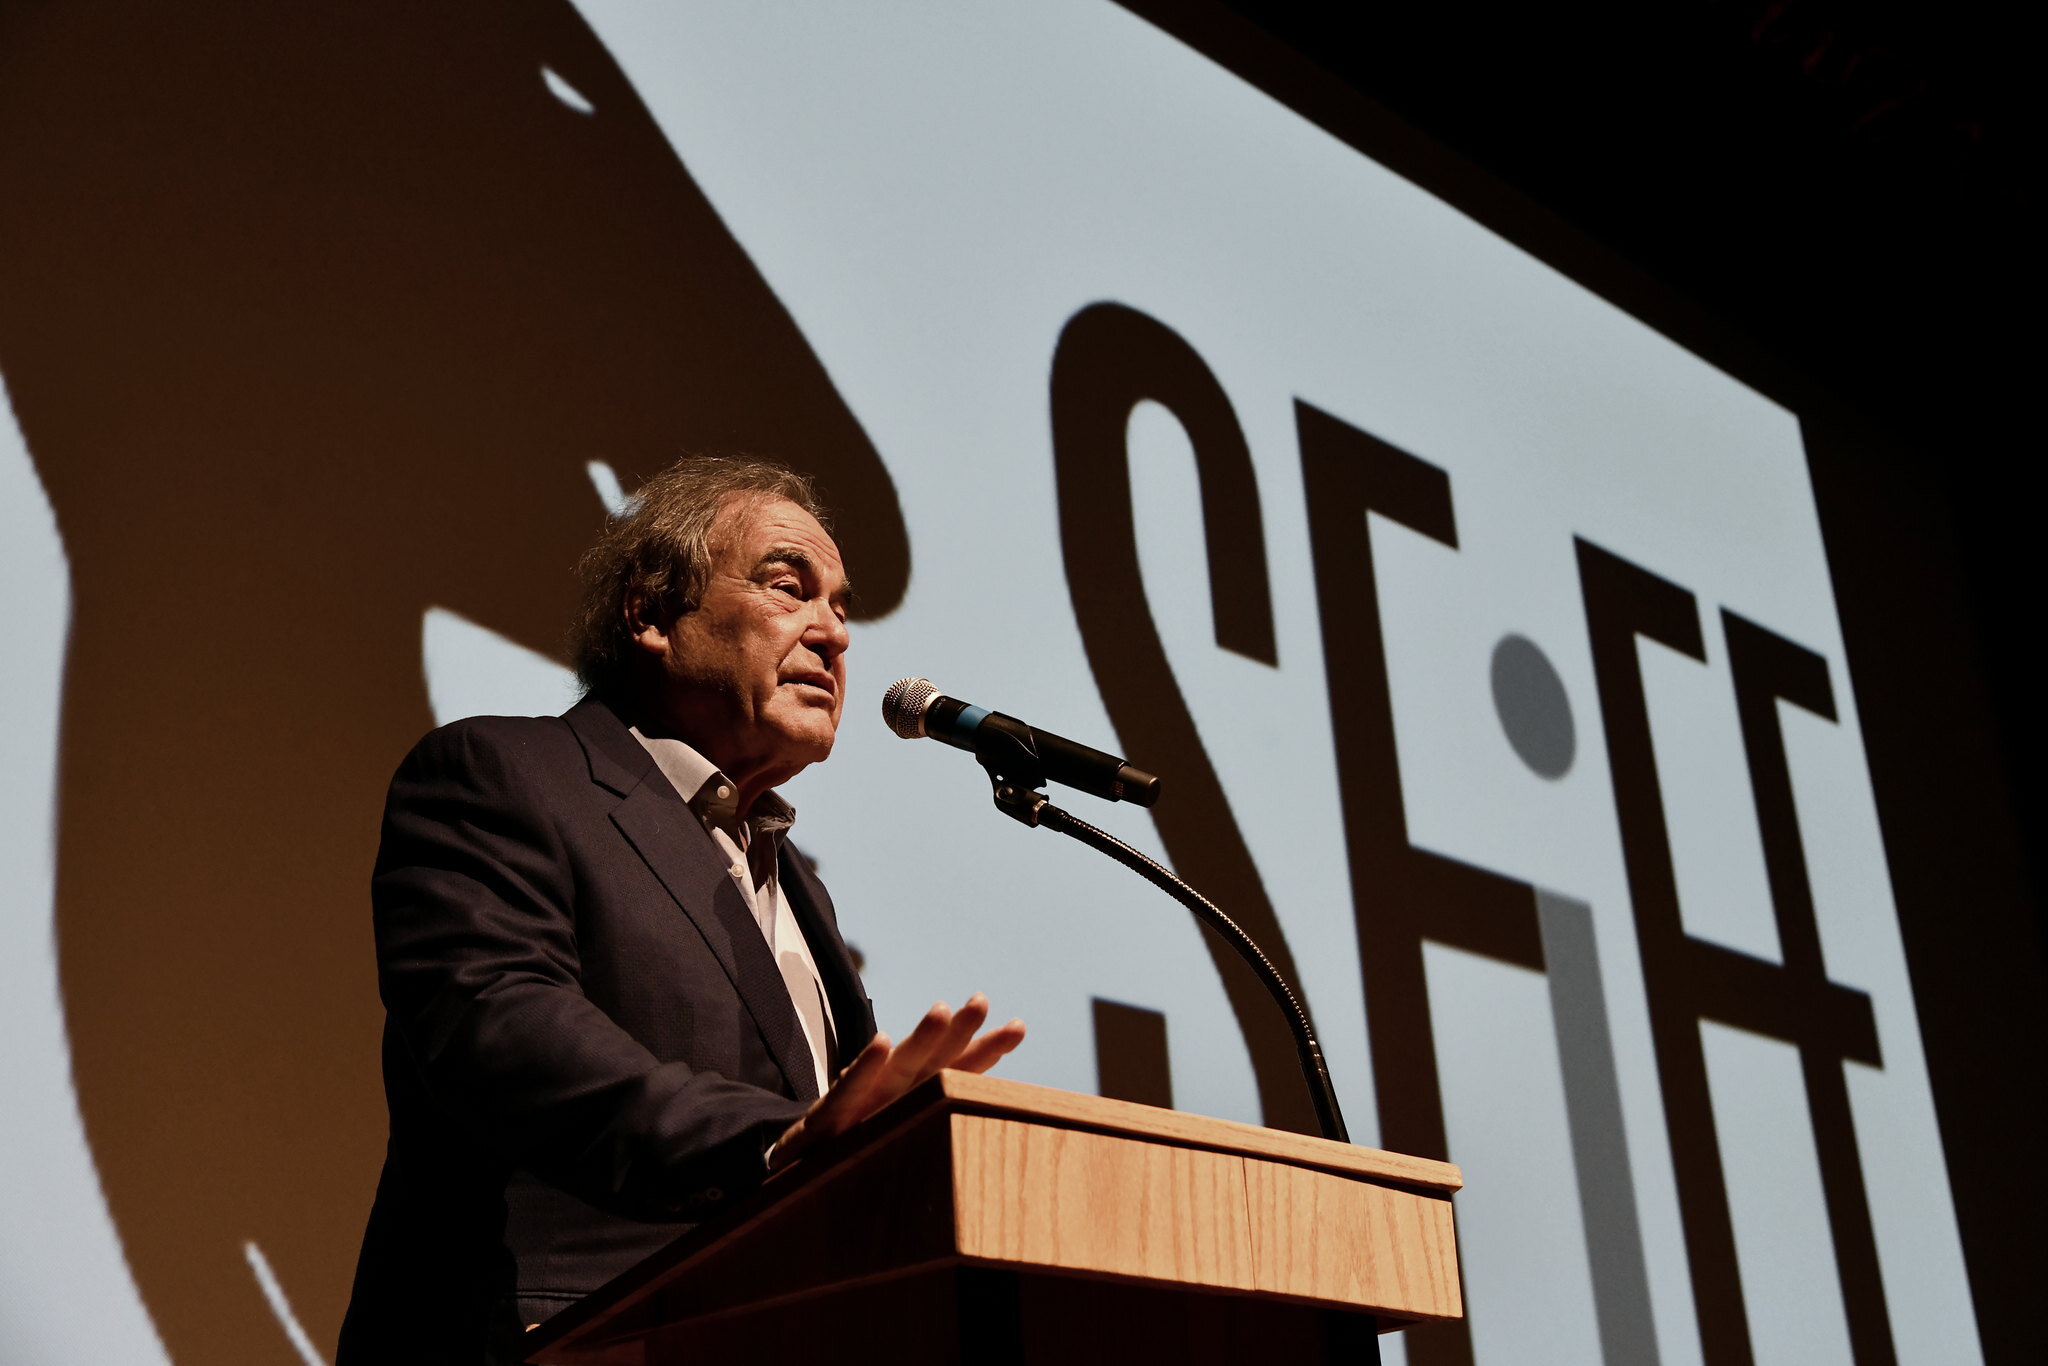 Oliver Stone at SFiFF's Lifetime Achievement Ceremony 2021